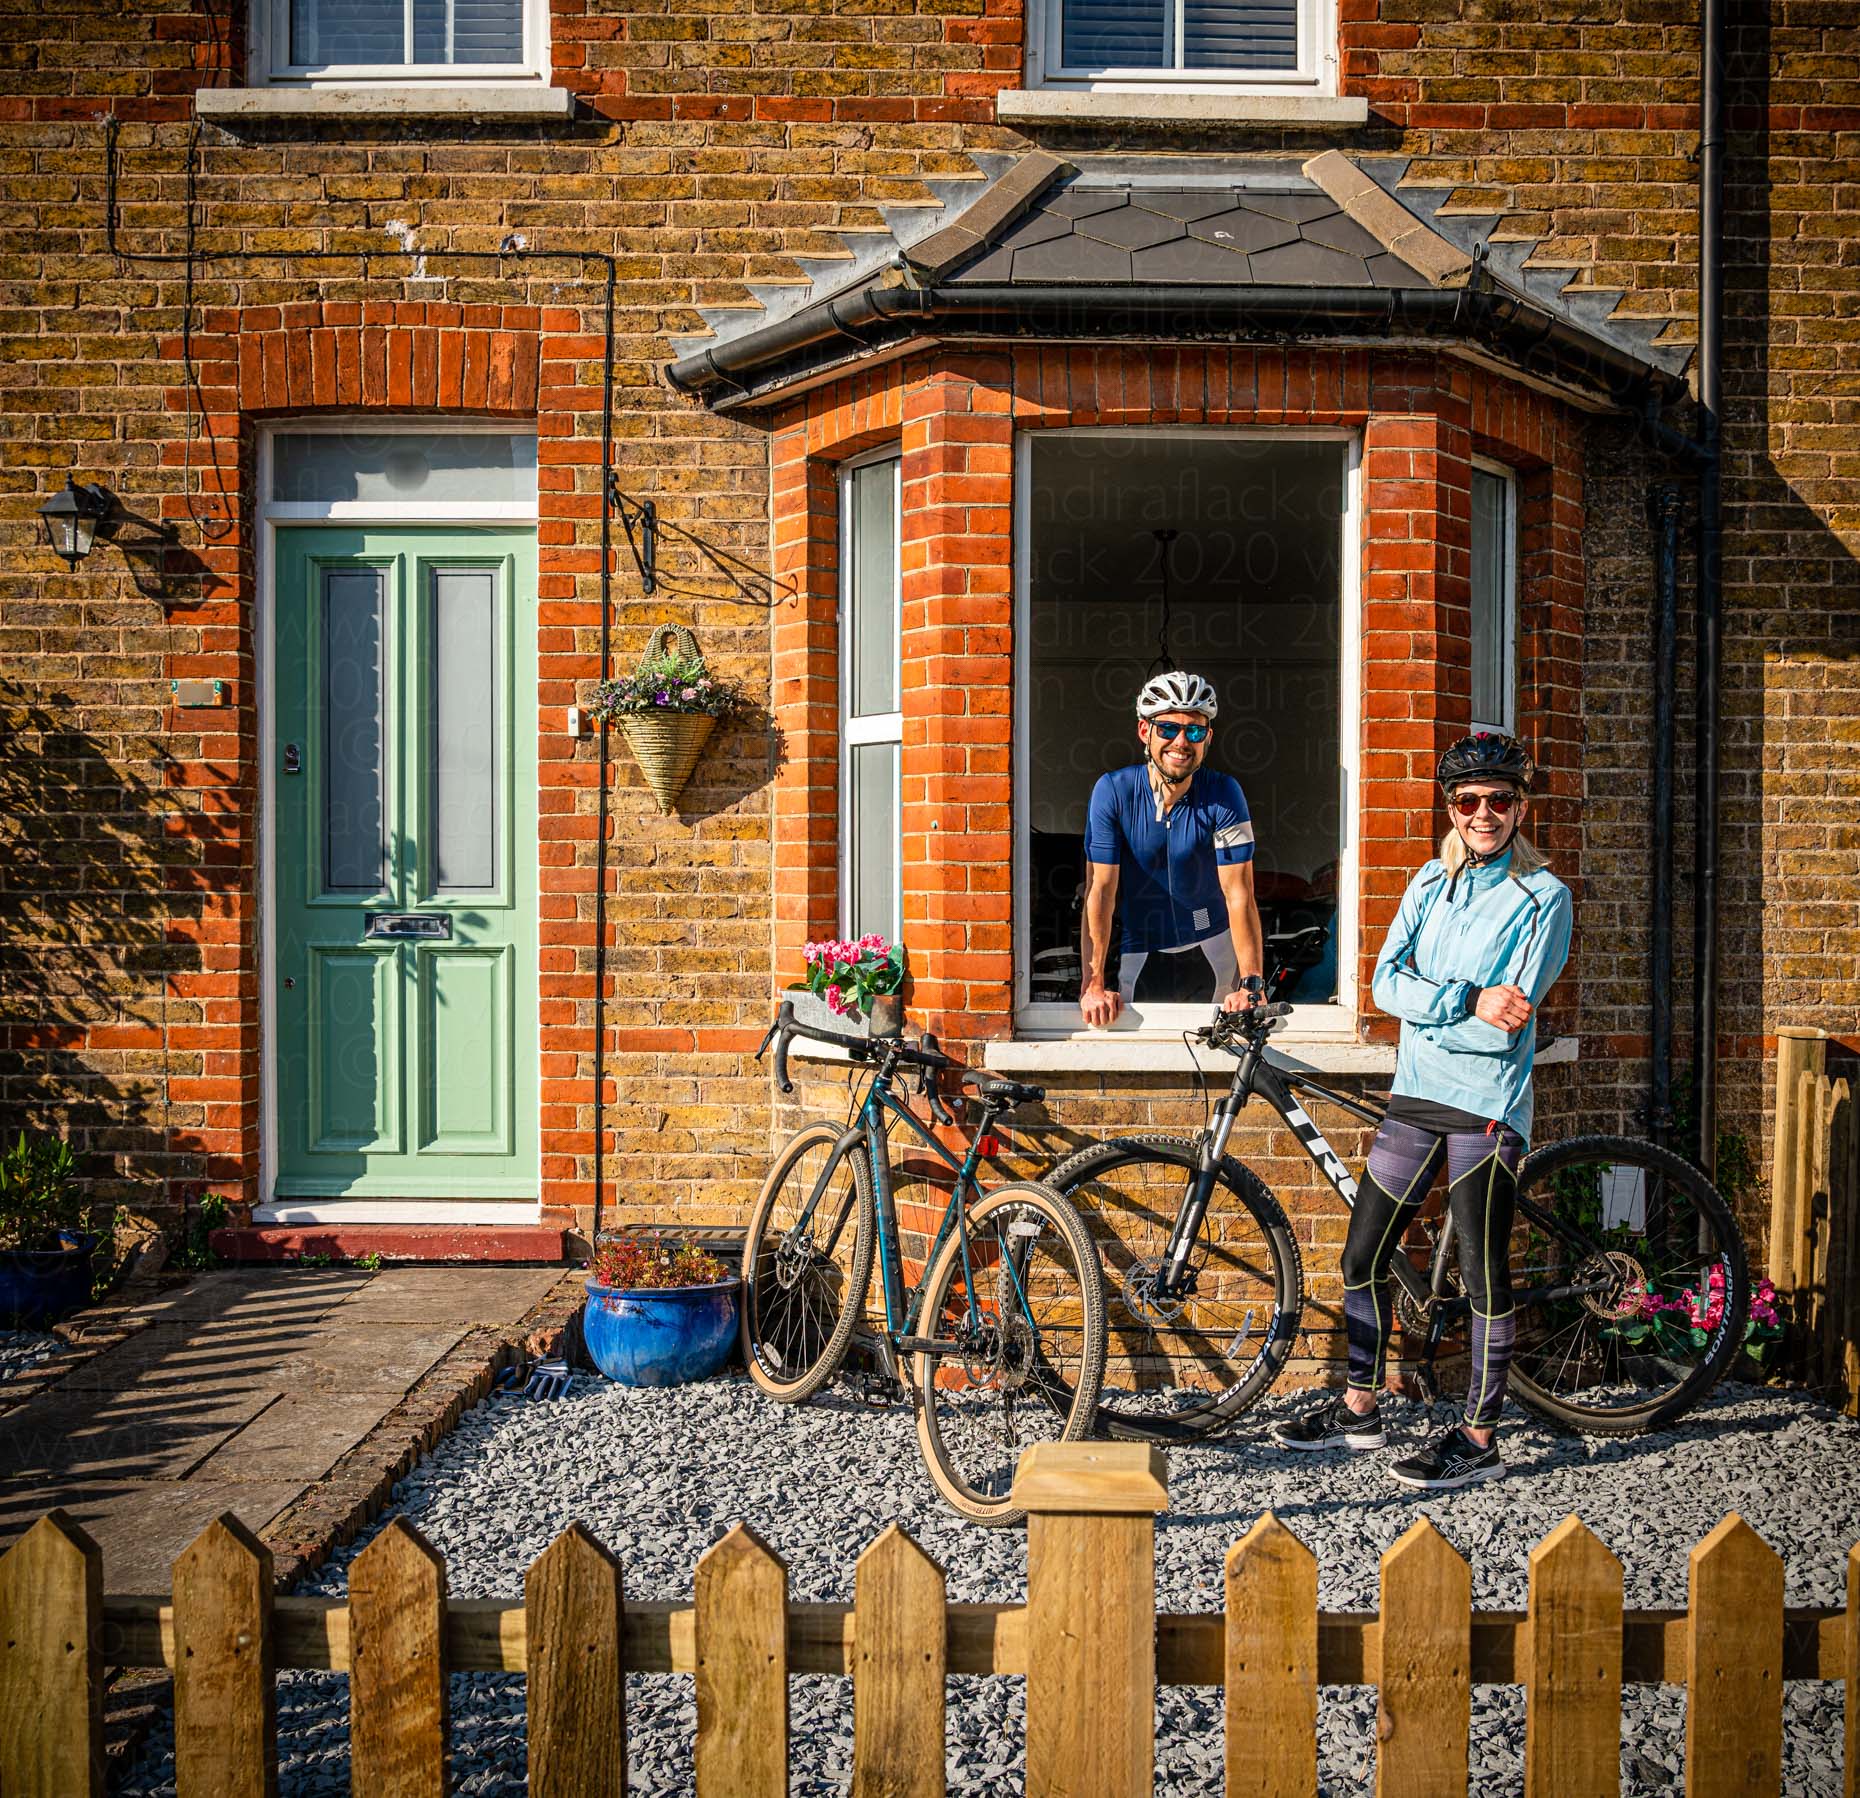 Anthony & Kayleigh neighbours in lockdown portrait taken by Indira Flack portrait photographer